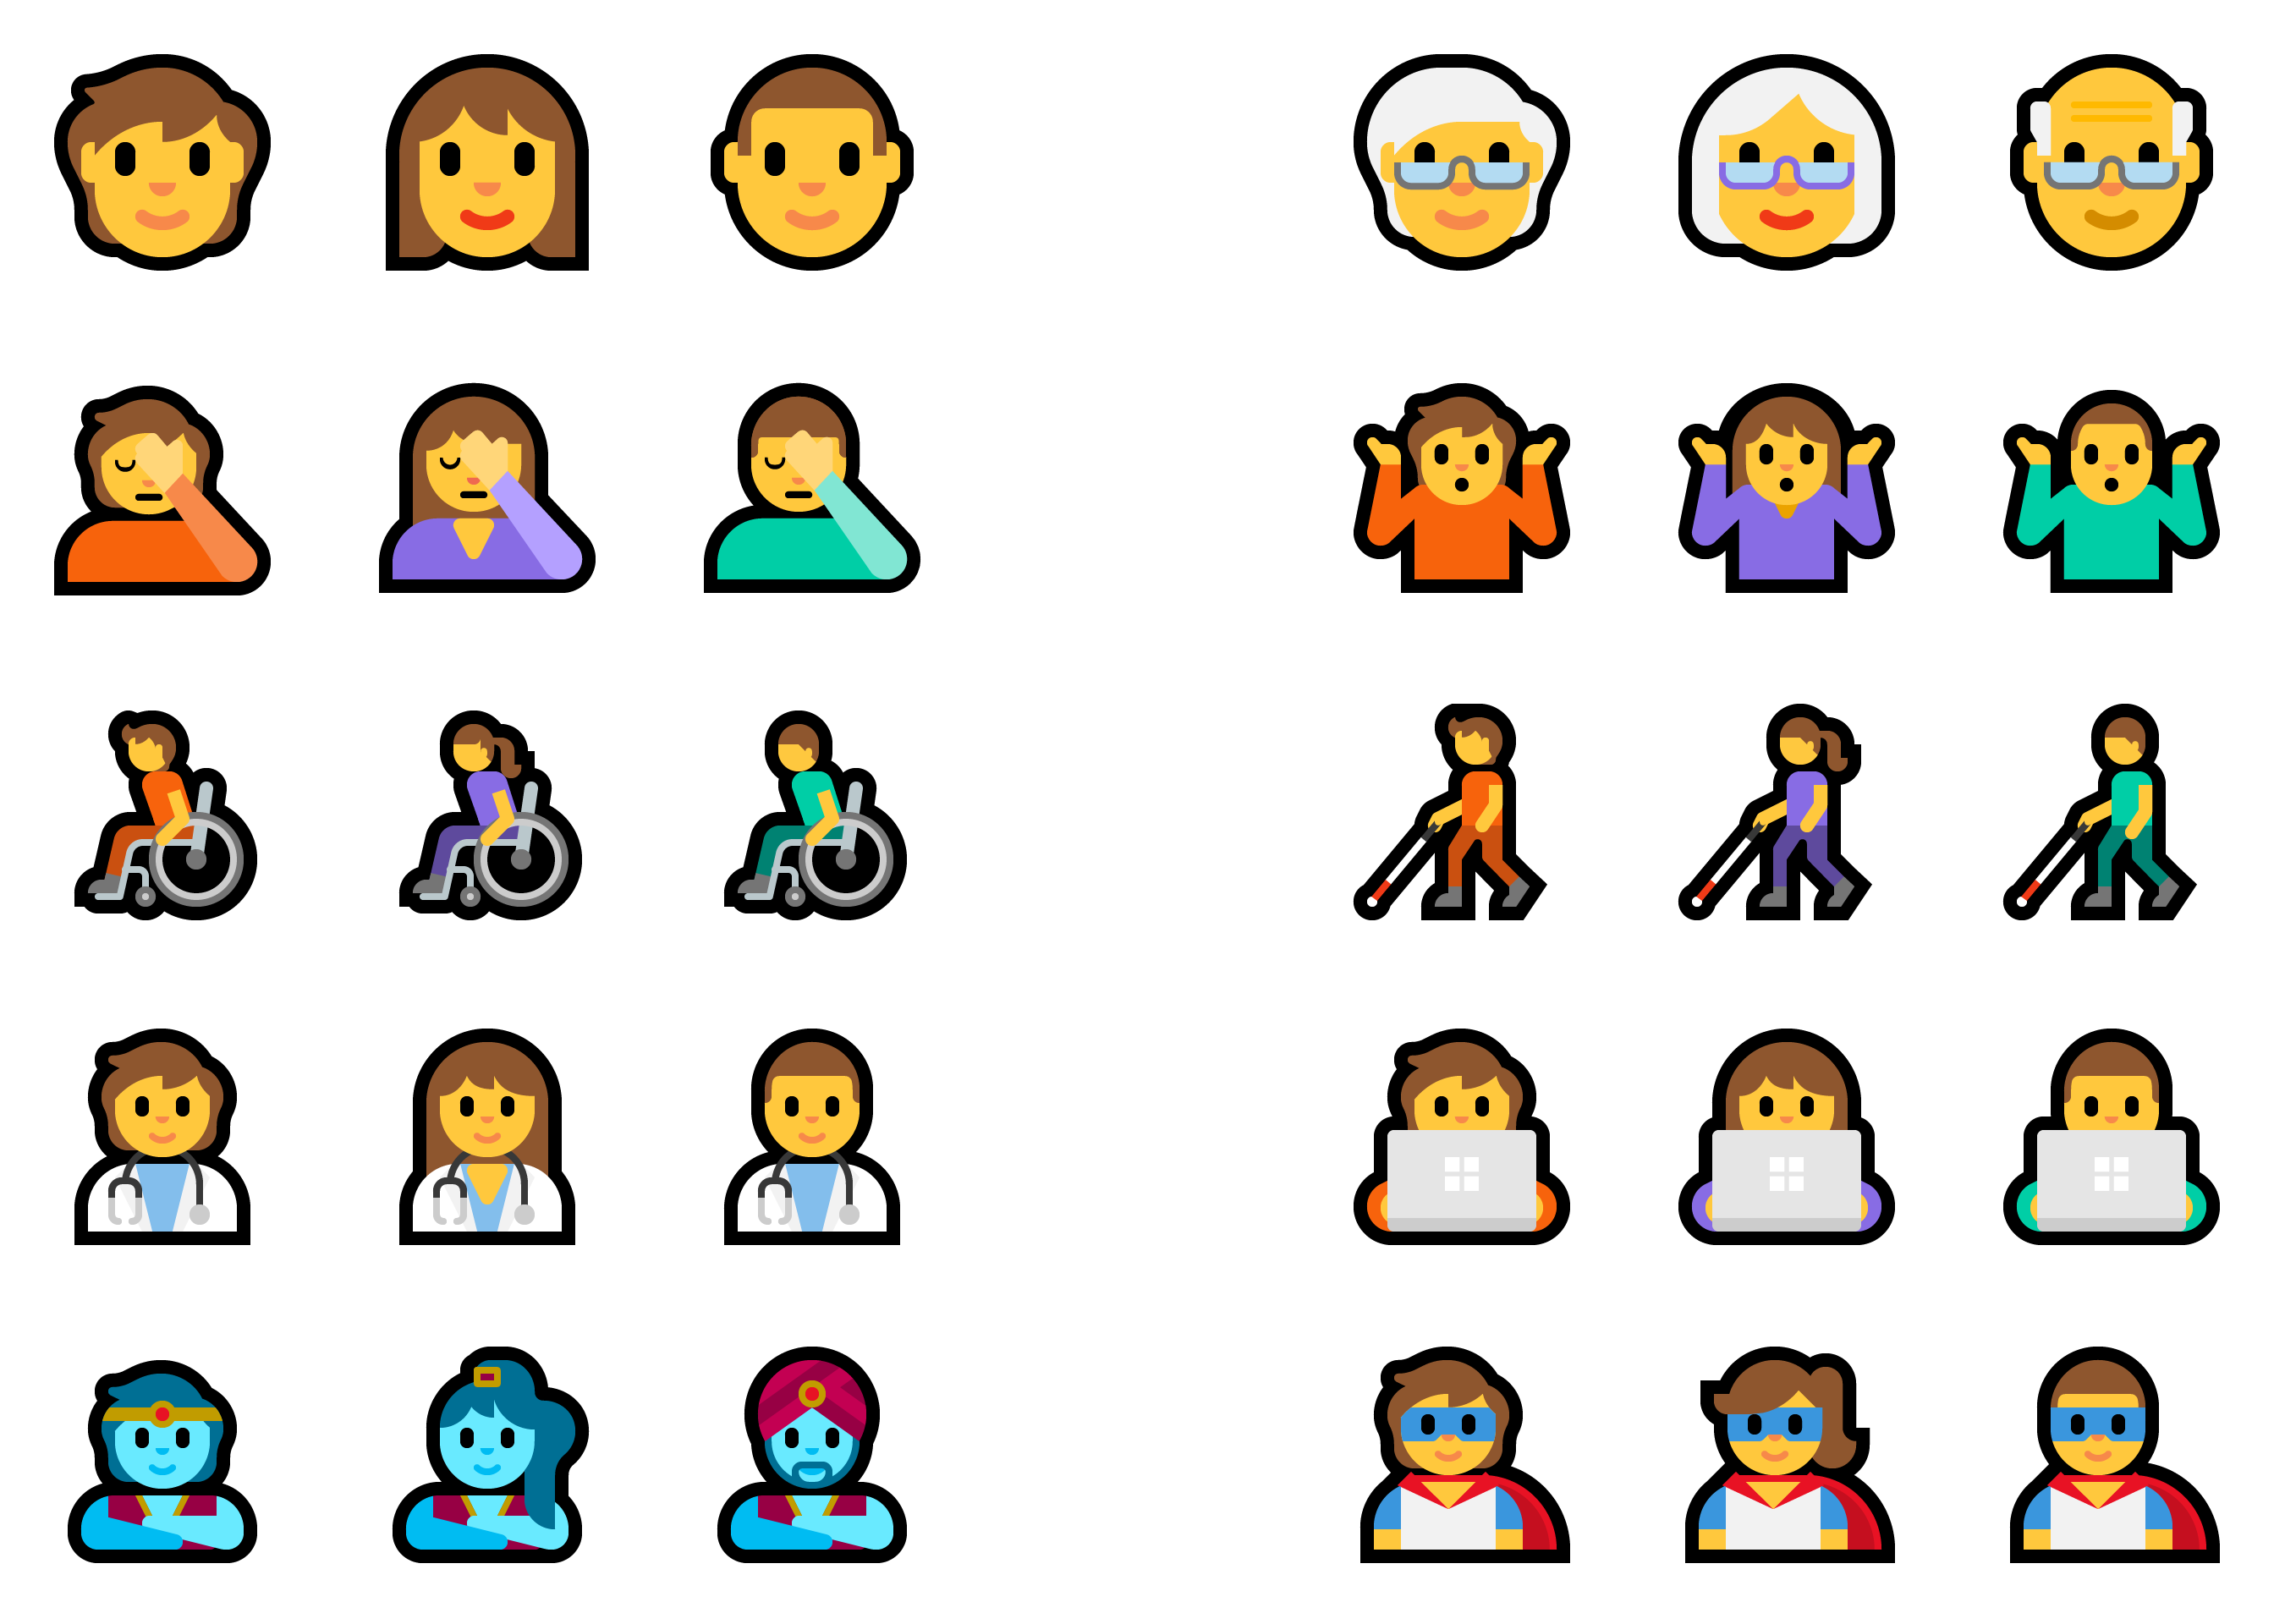 Displaying 3 versions (male, female, and gender-neutral) of various emoji (genie, superhero, person shrugging, etc.).